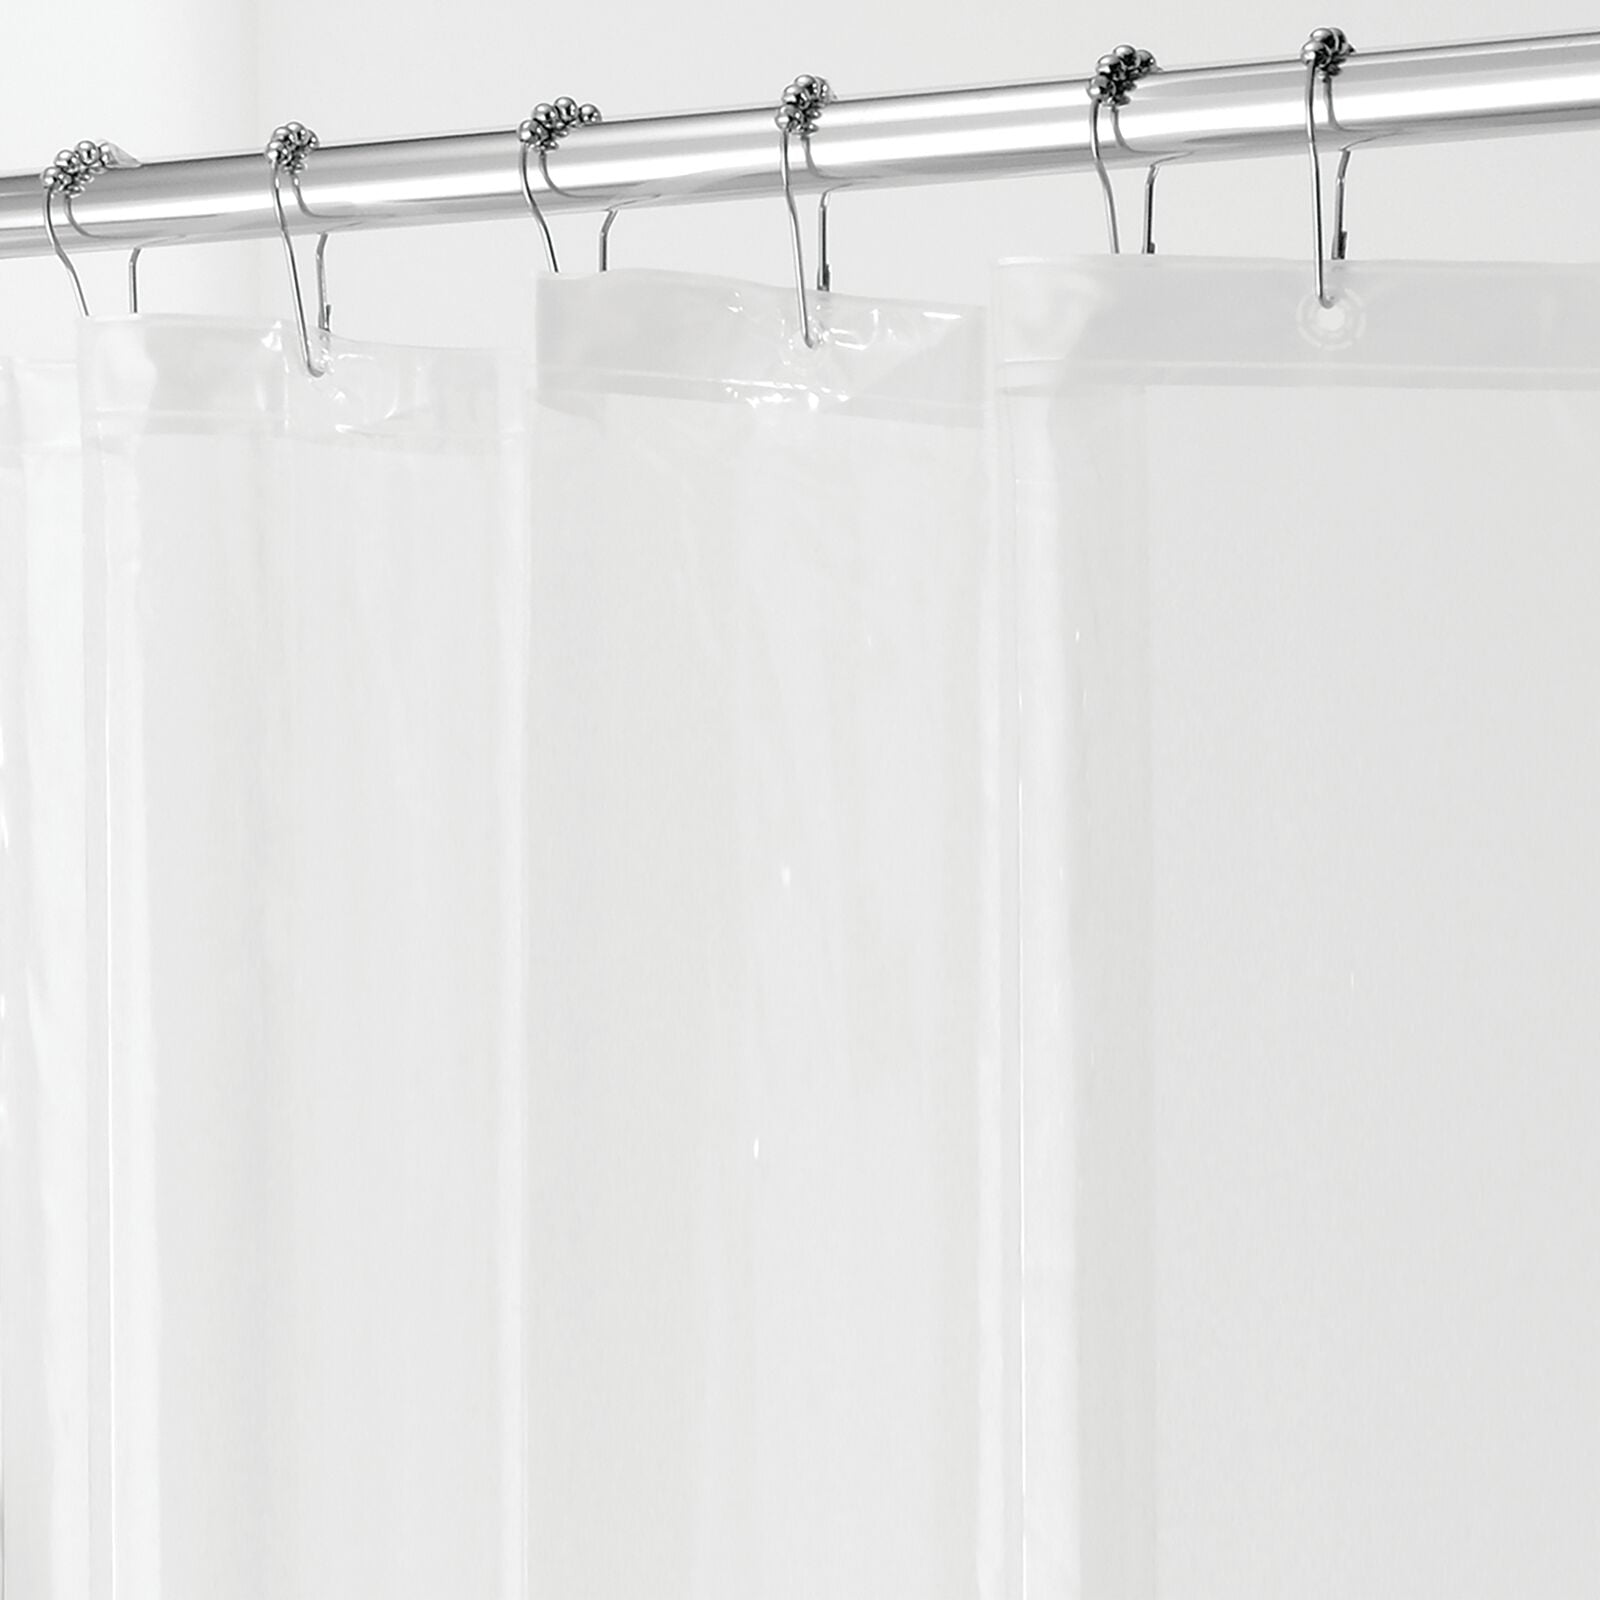 ⭐ Super Heavy Weight 10 Gauge Shower Curtain or Liner Rust Proof Metal Grommets 